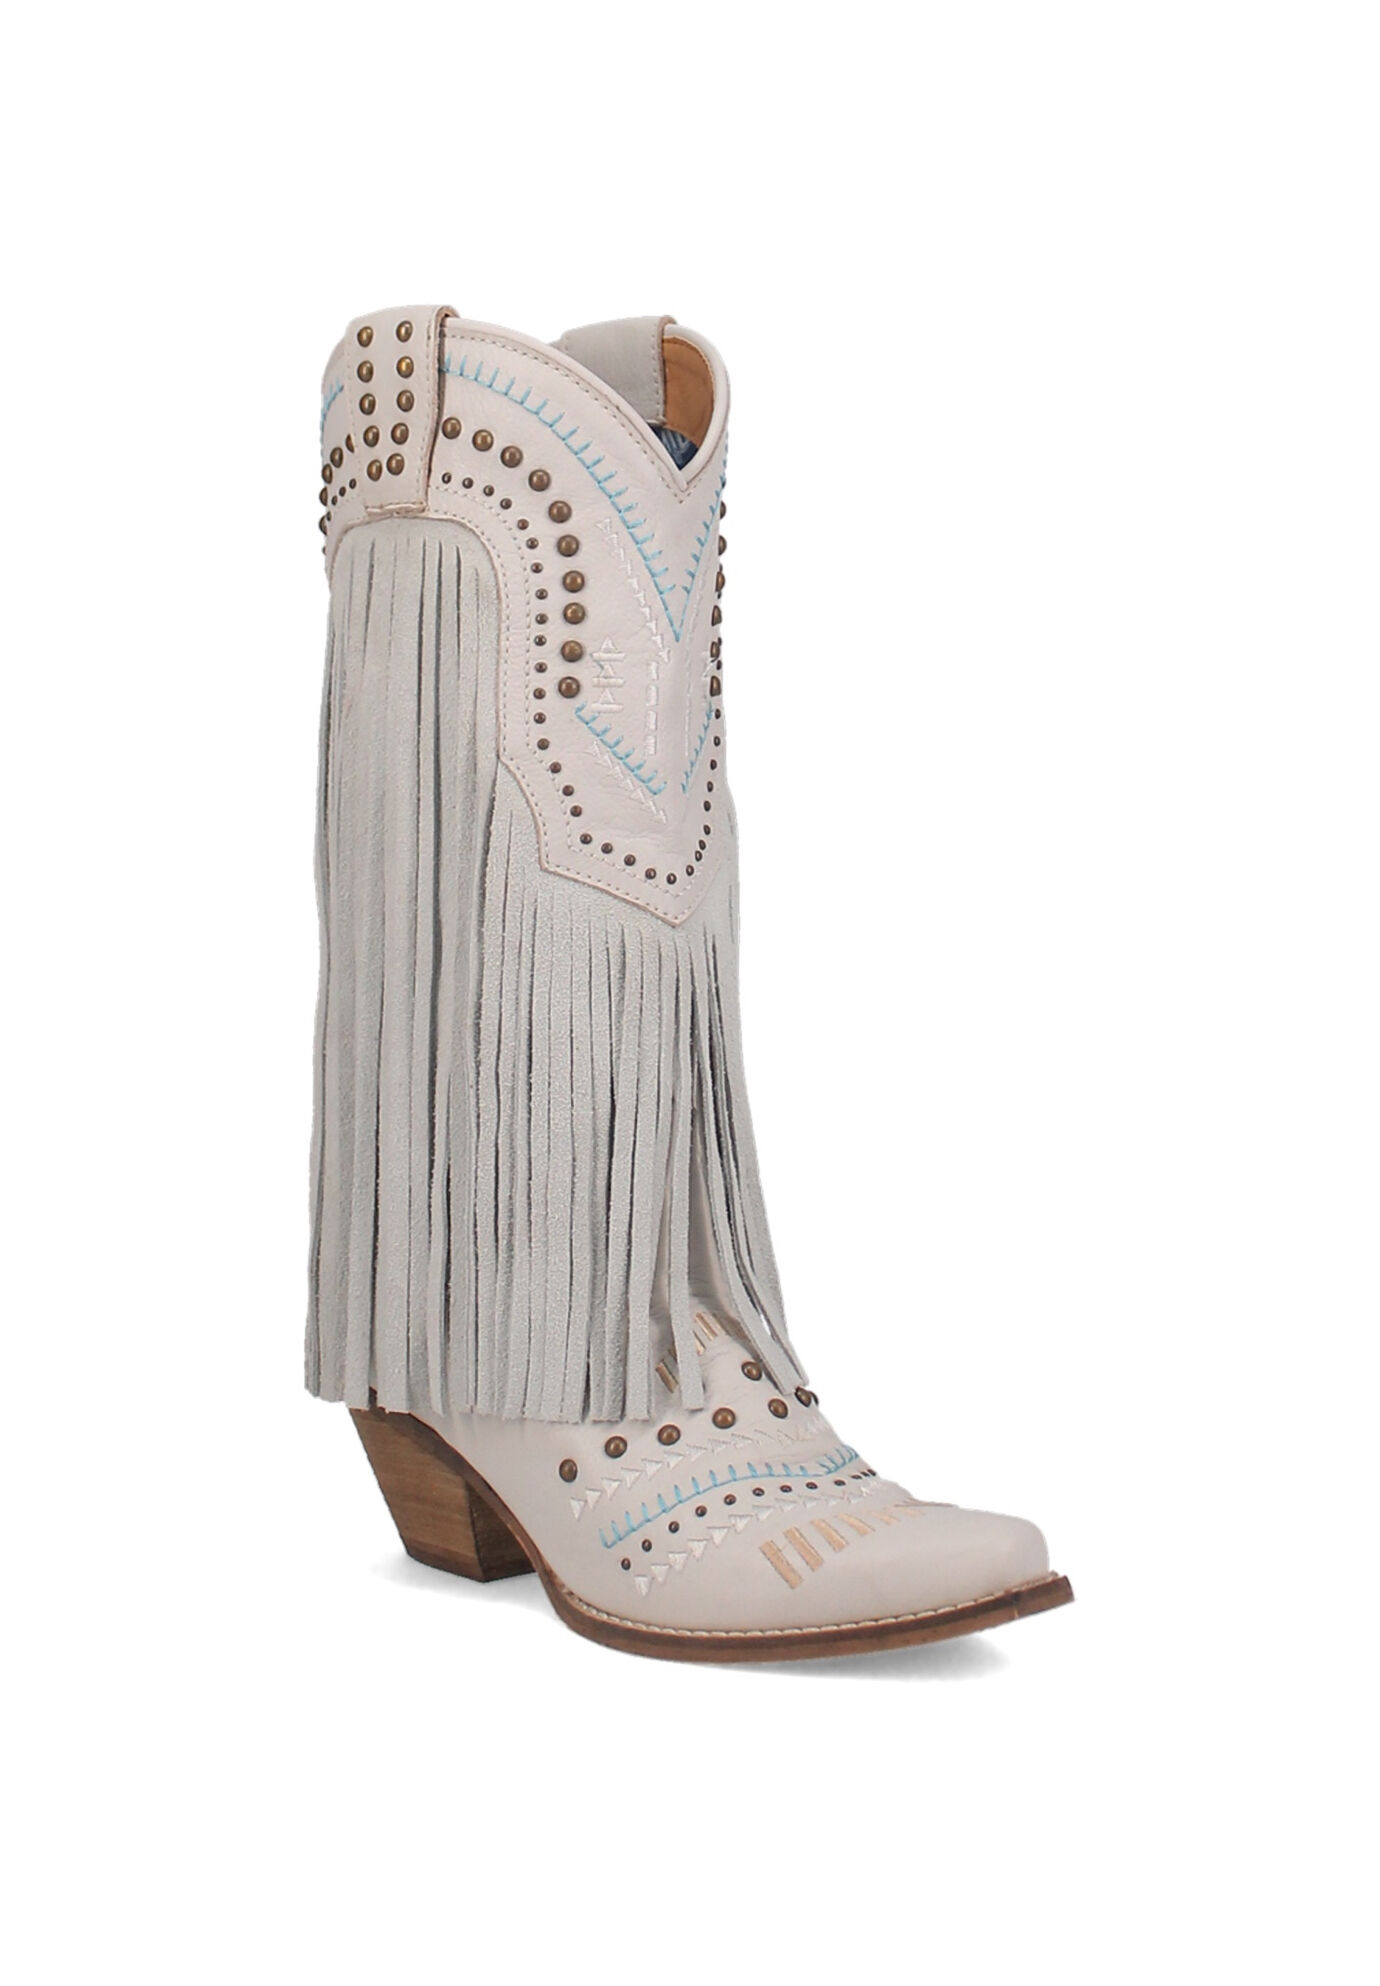 Women's Gypsy Western Fringe Boot by Dingo in White (Size 6 M)